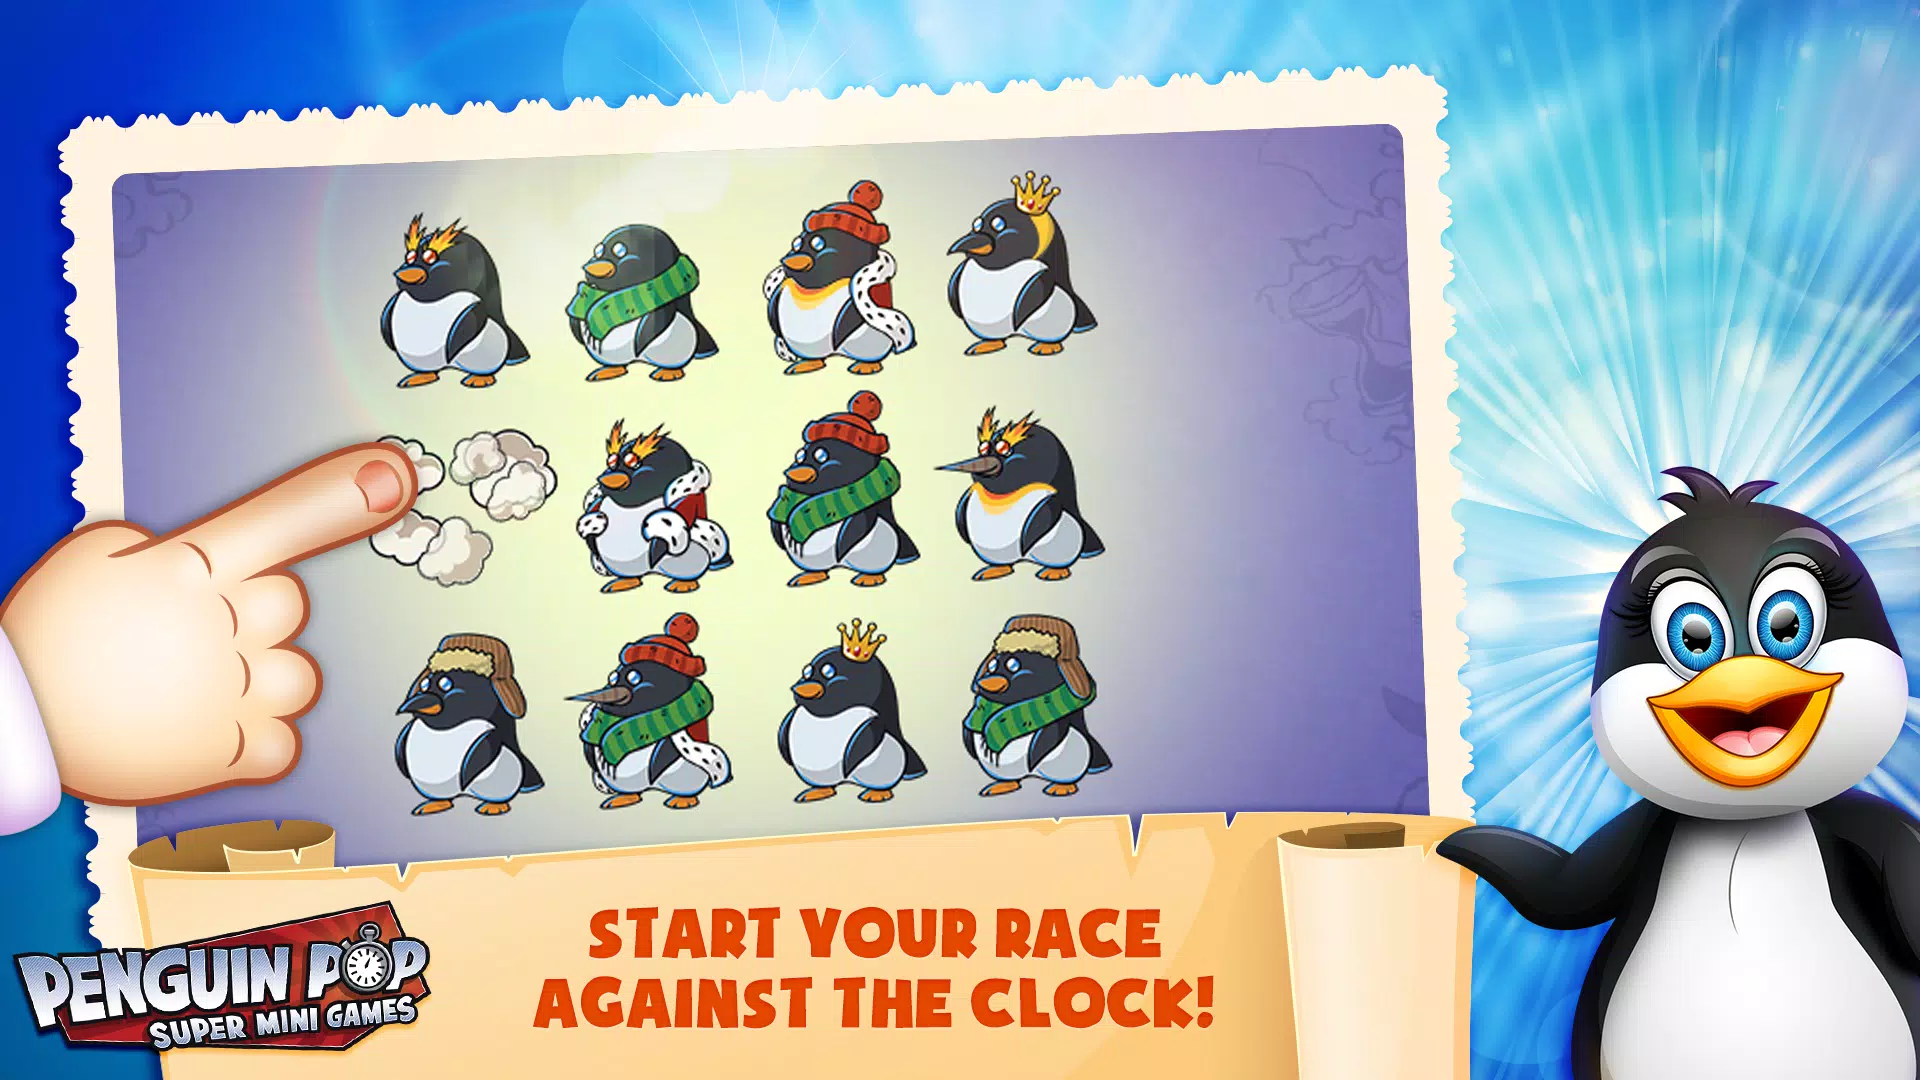 Download do APK de Mini Jogos De Pinguins para Android